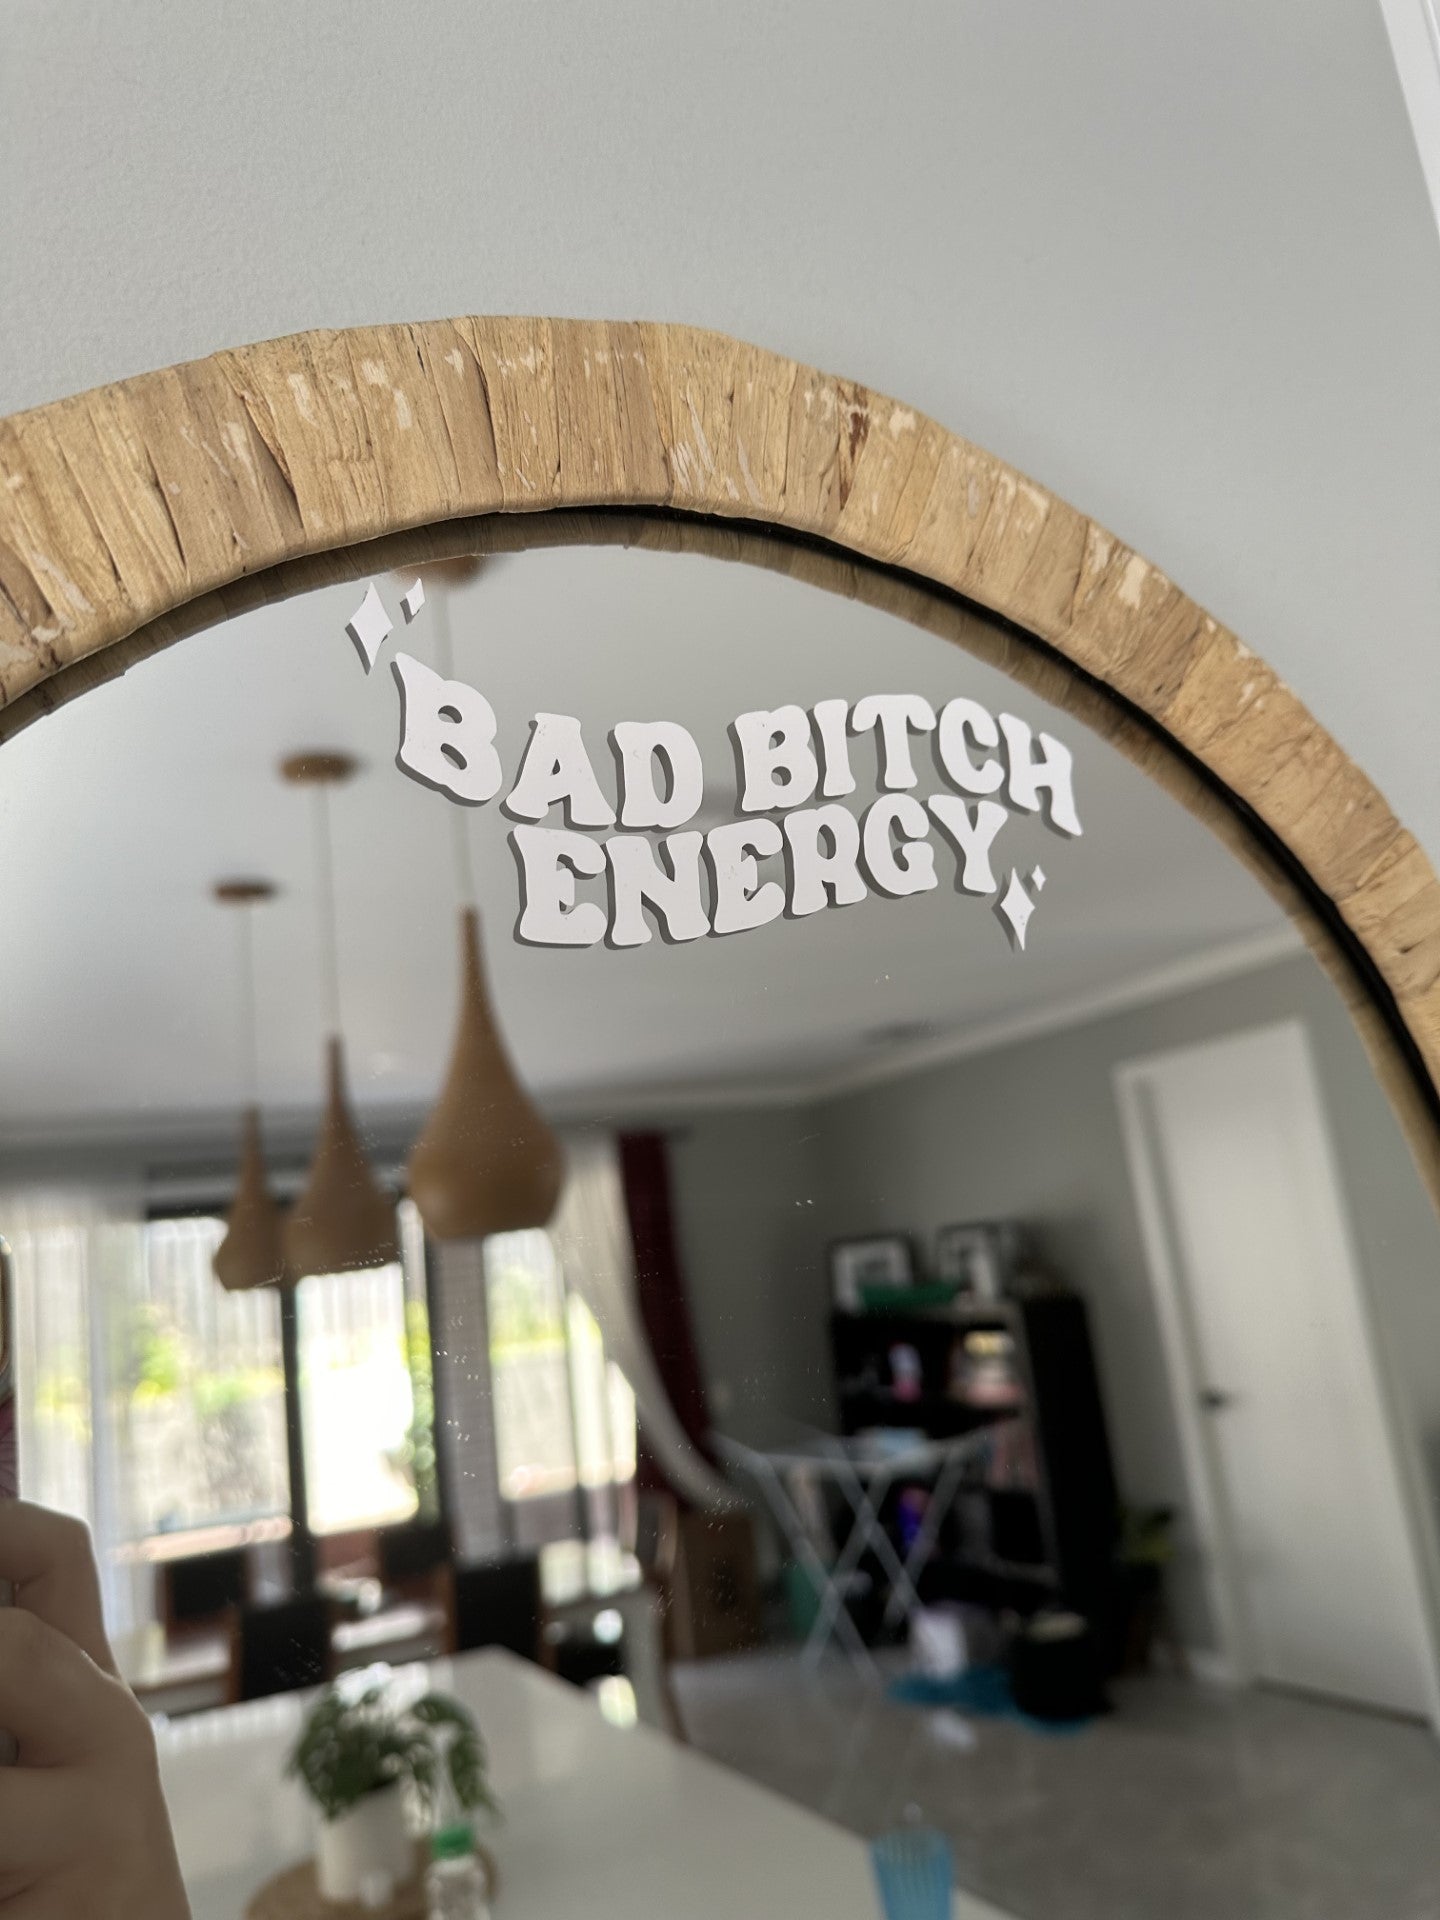 Affirmation Mirror Sticker - Bad Bitch Energy